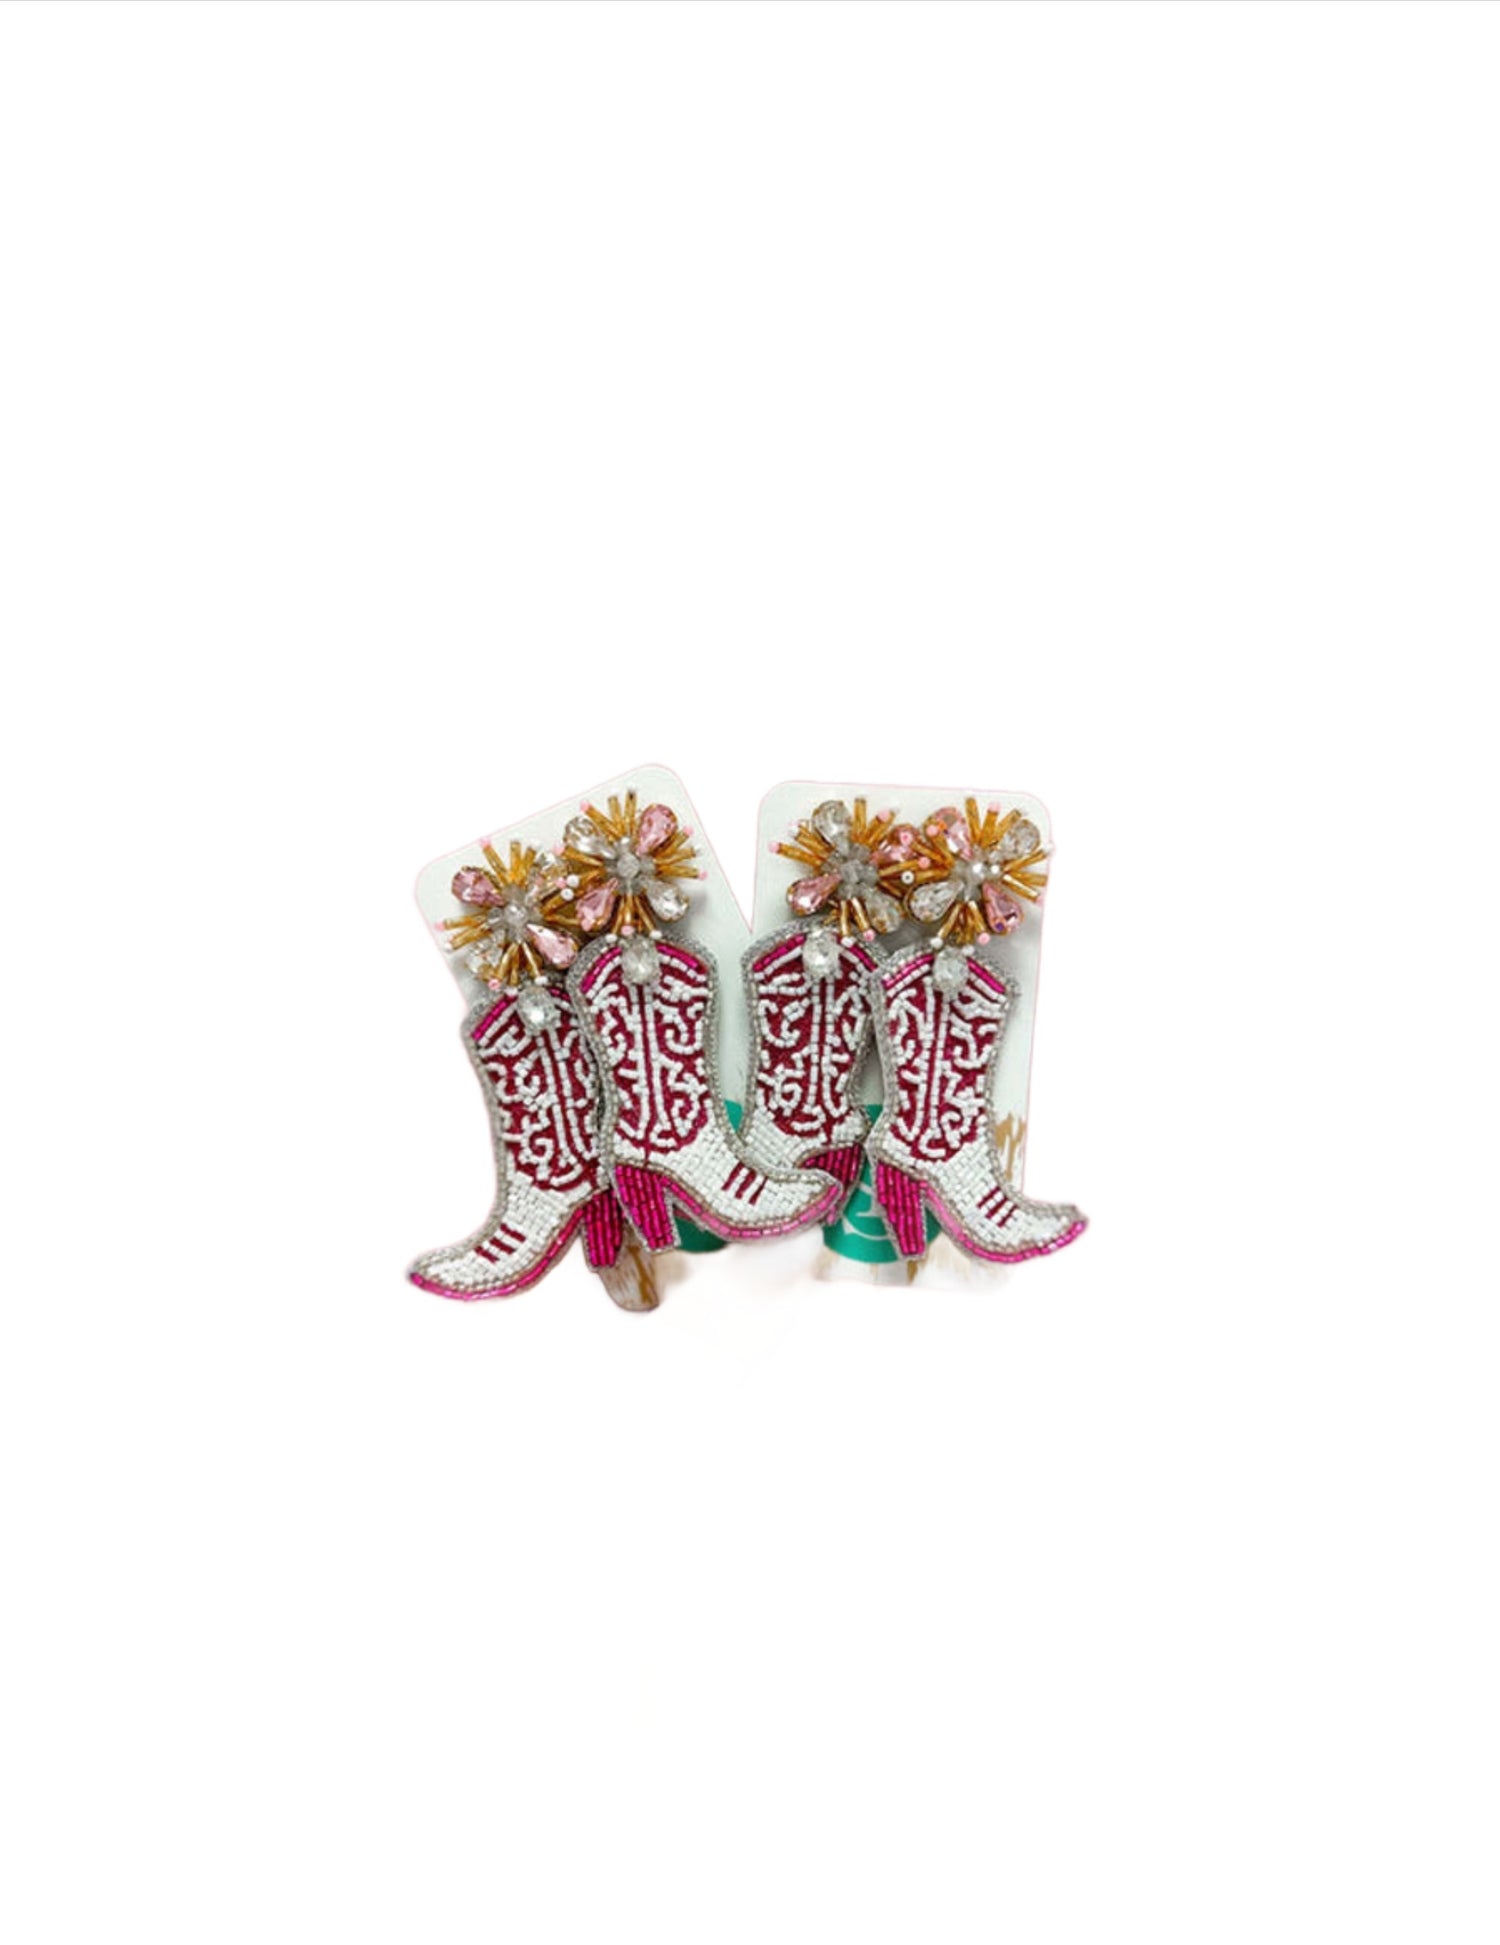 Lambert Pink Boot Earrings